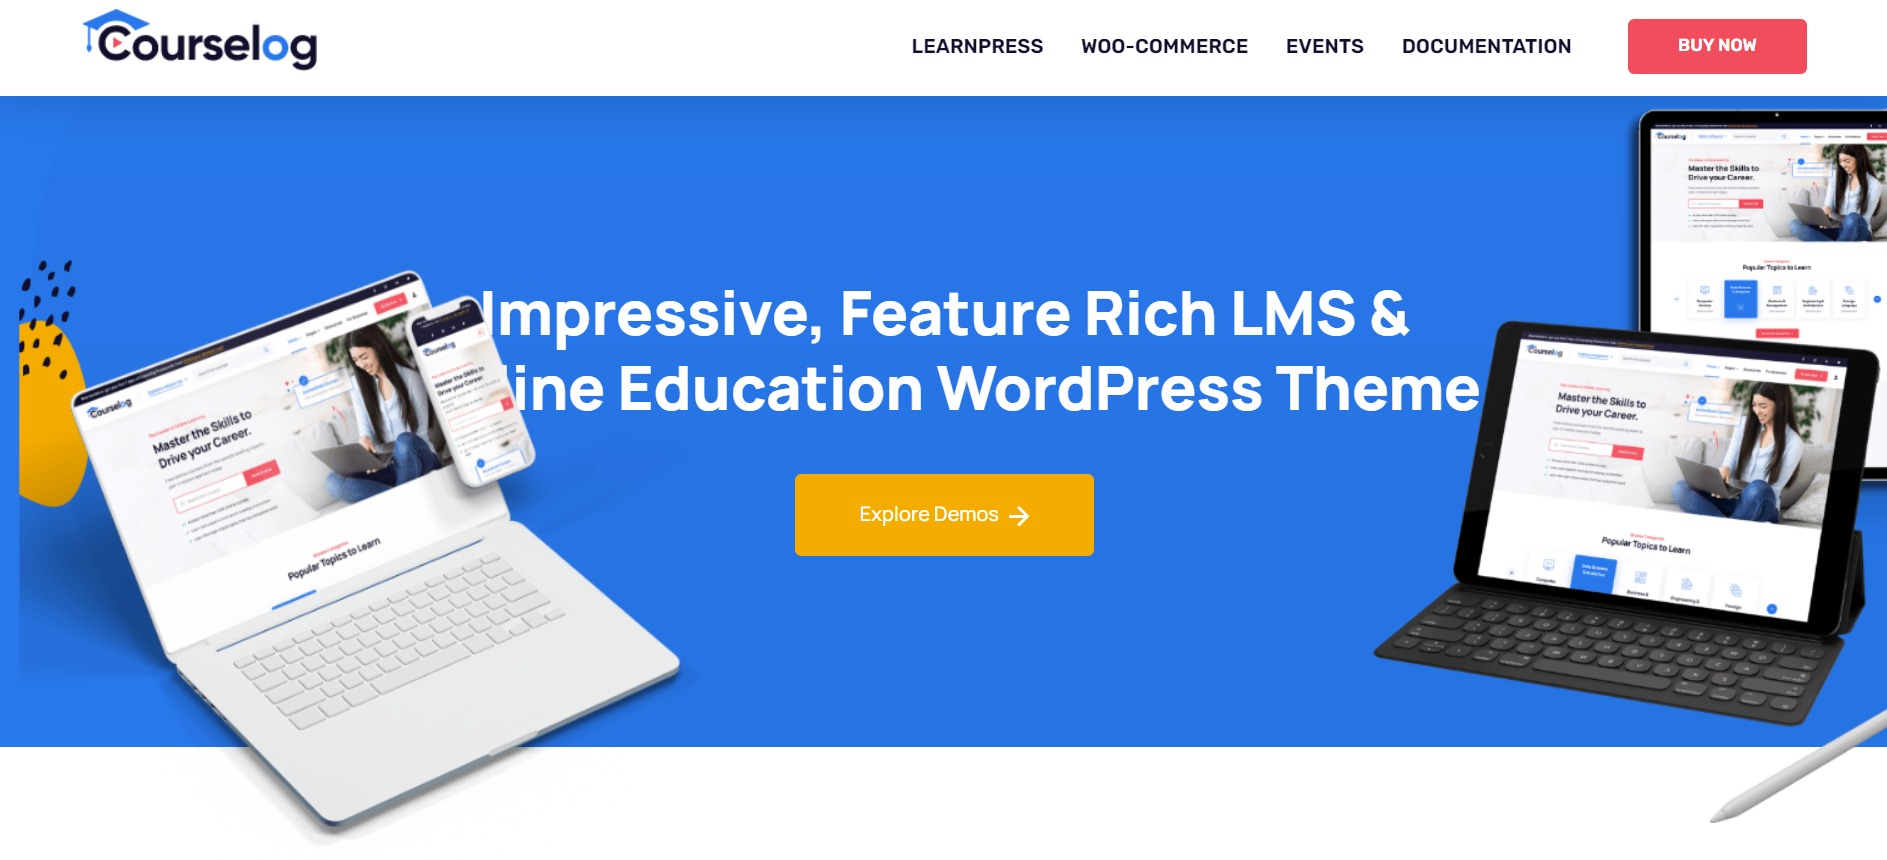 course log impressive wordpress lms theme